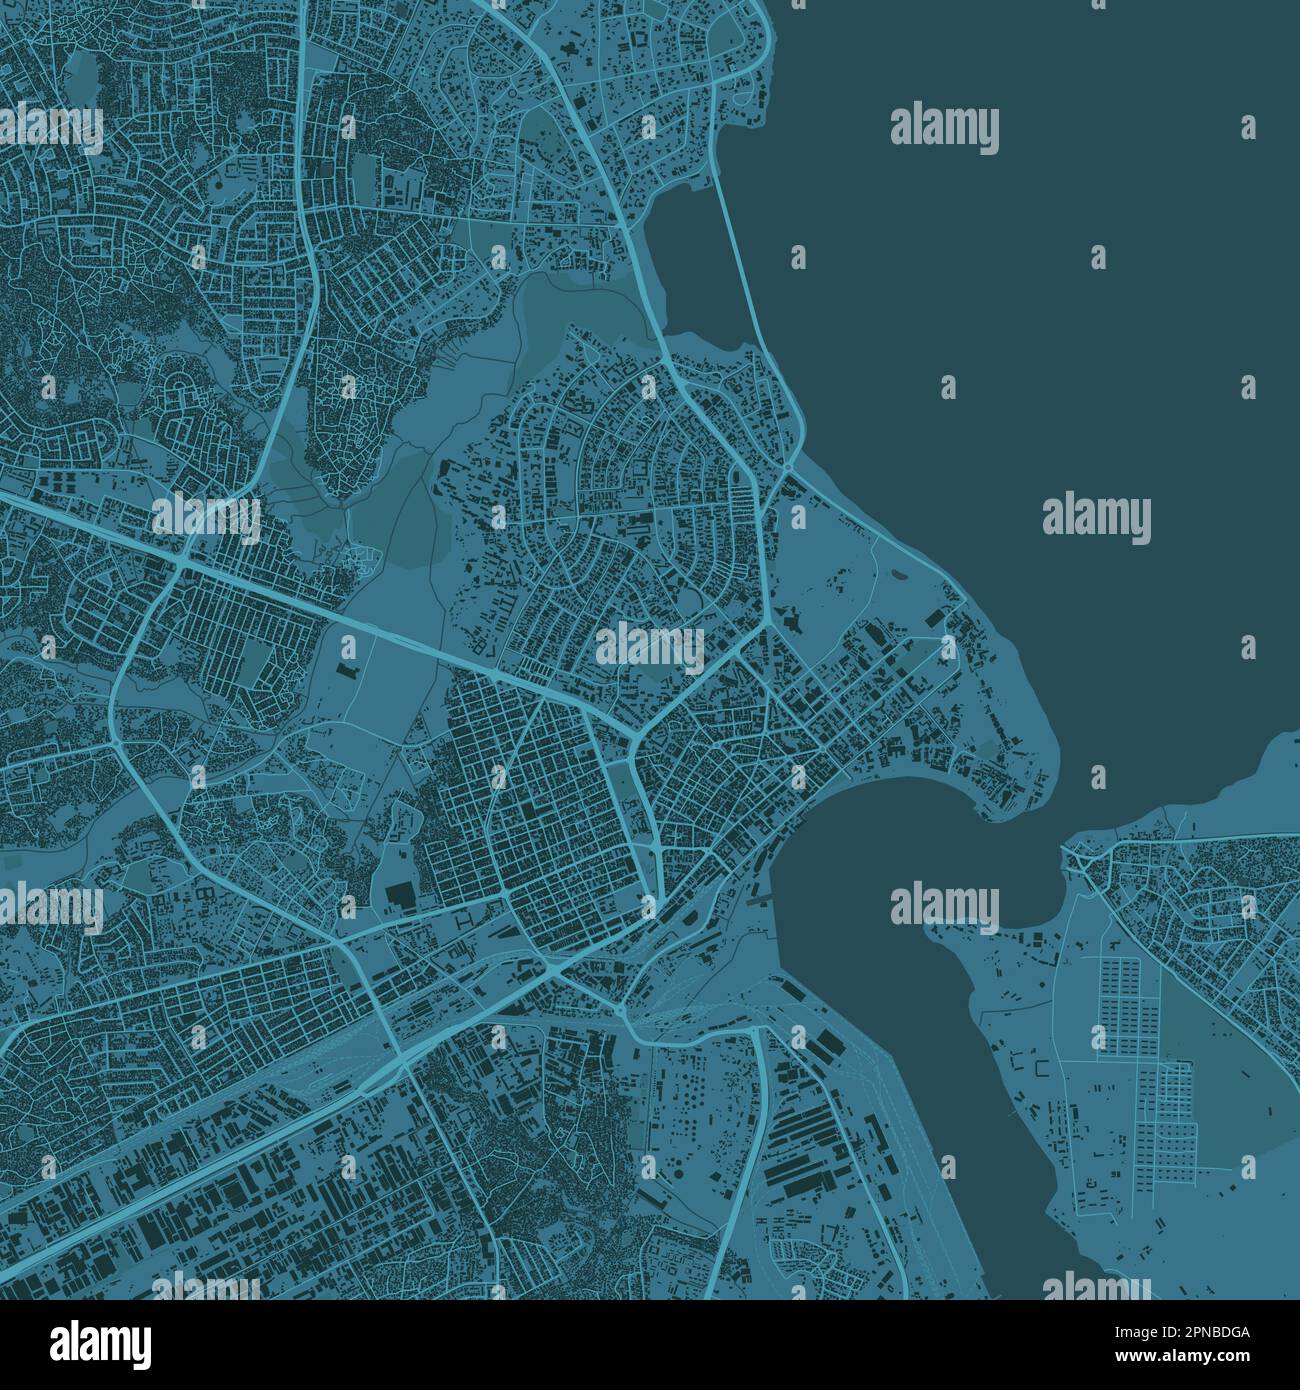 Dark blue Dar es Salaam city area, Tanzania, vector background map, roads and water illustration. Widescreen proportion, digital flat design roadmap. Stock Vector